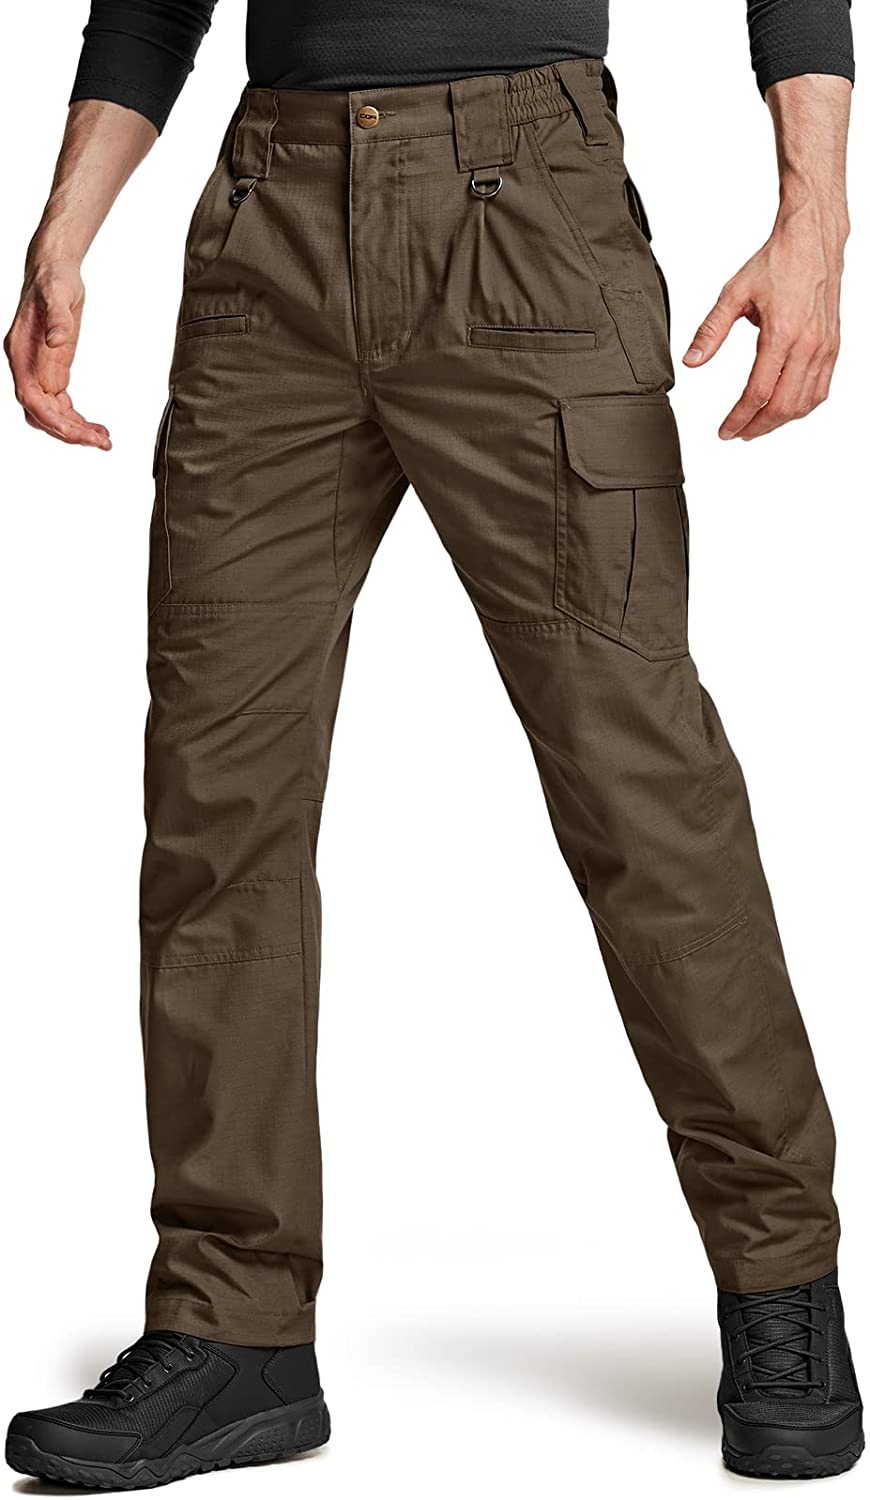 Water Resistant Tactical Pants Outdoor Utility Operator EDC Straight/Cargo Pants CQR Men's Ripstop Work Pants 